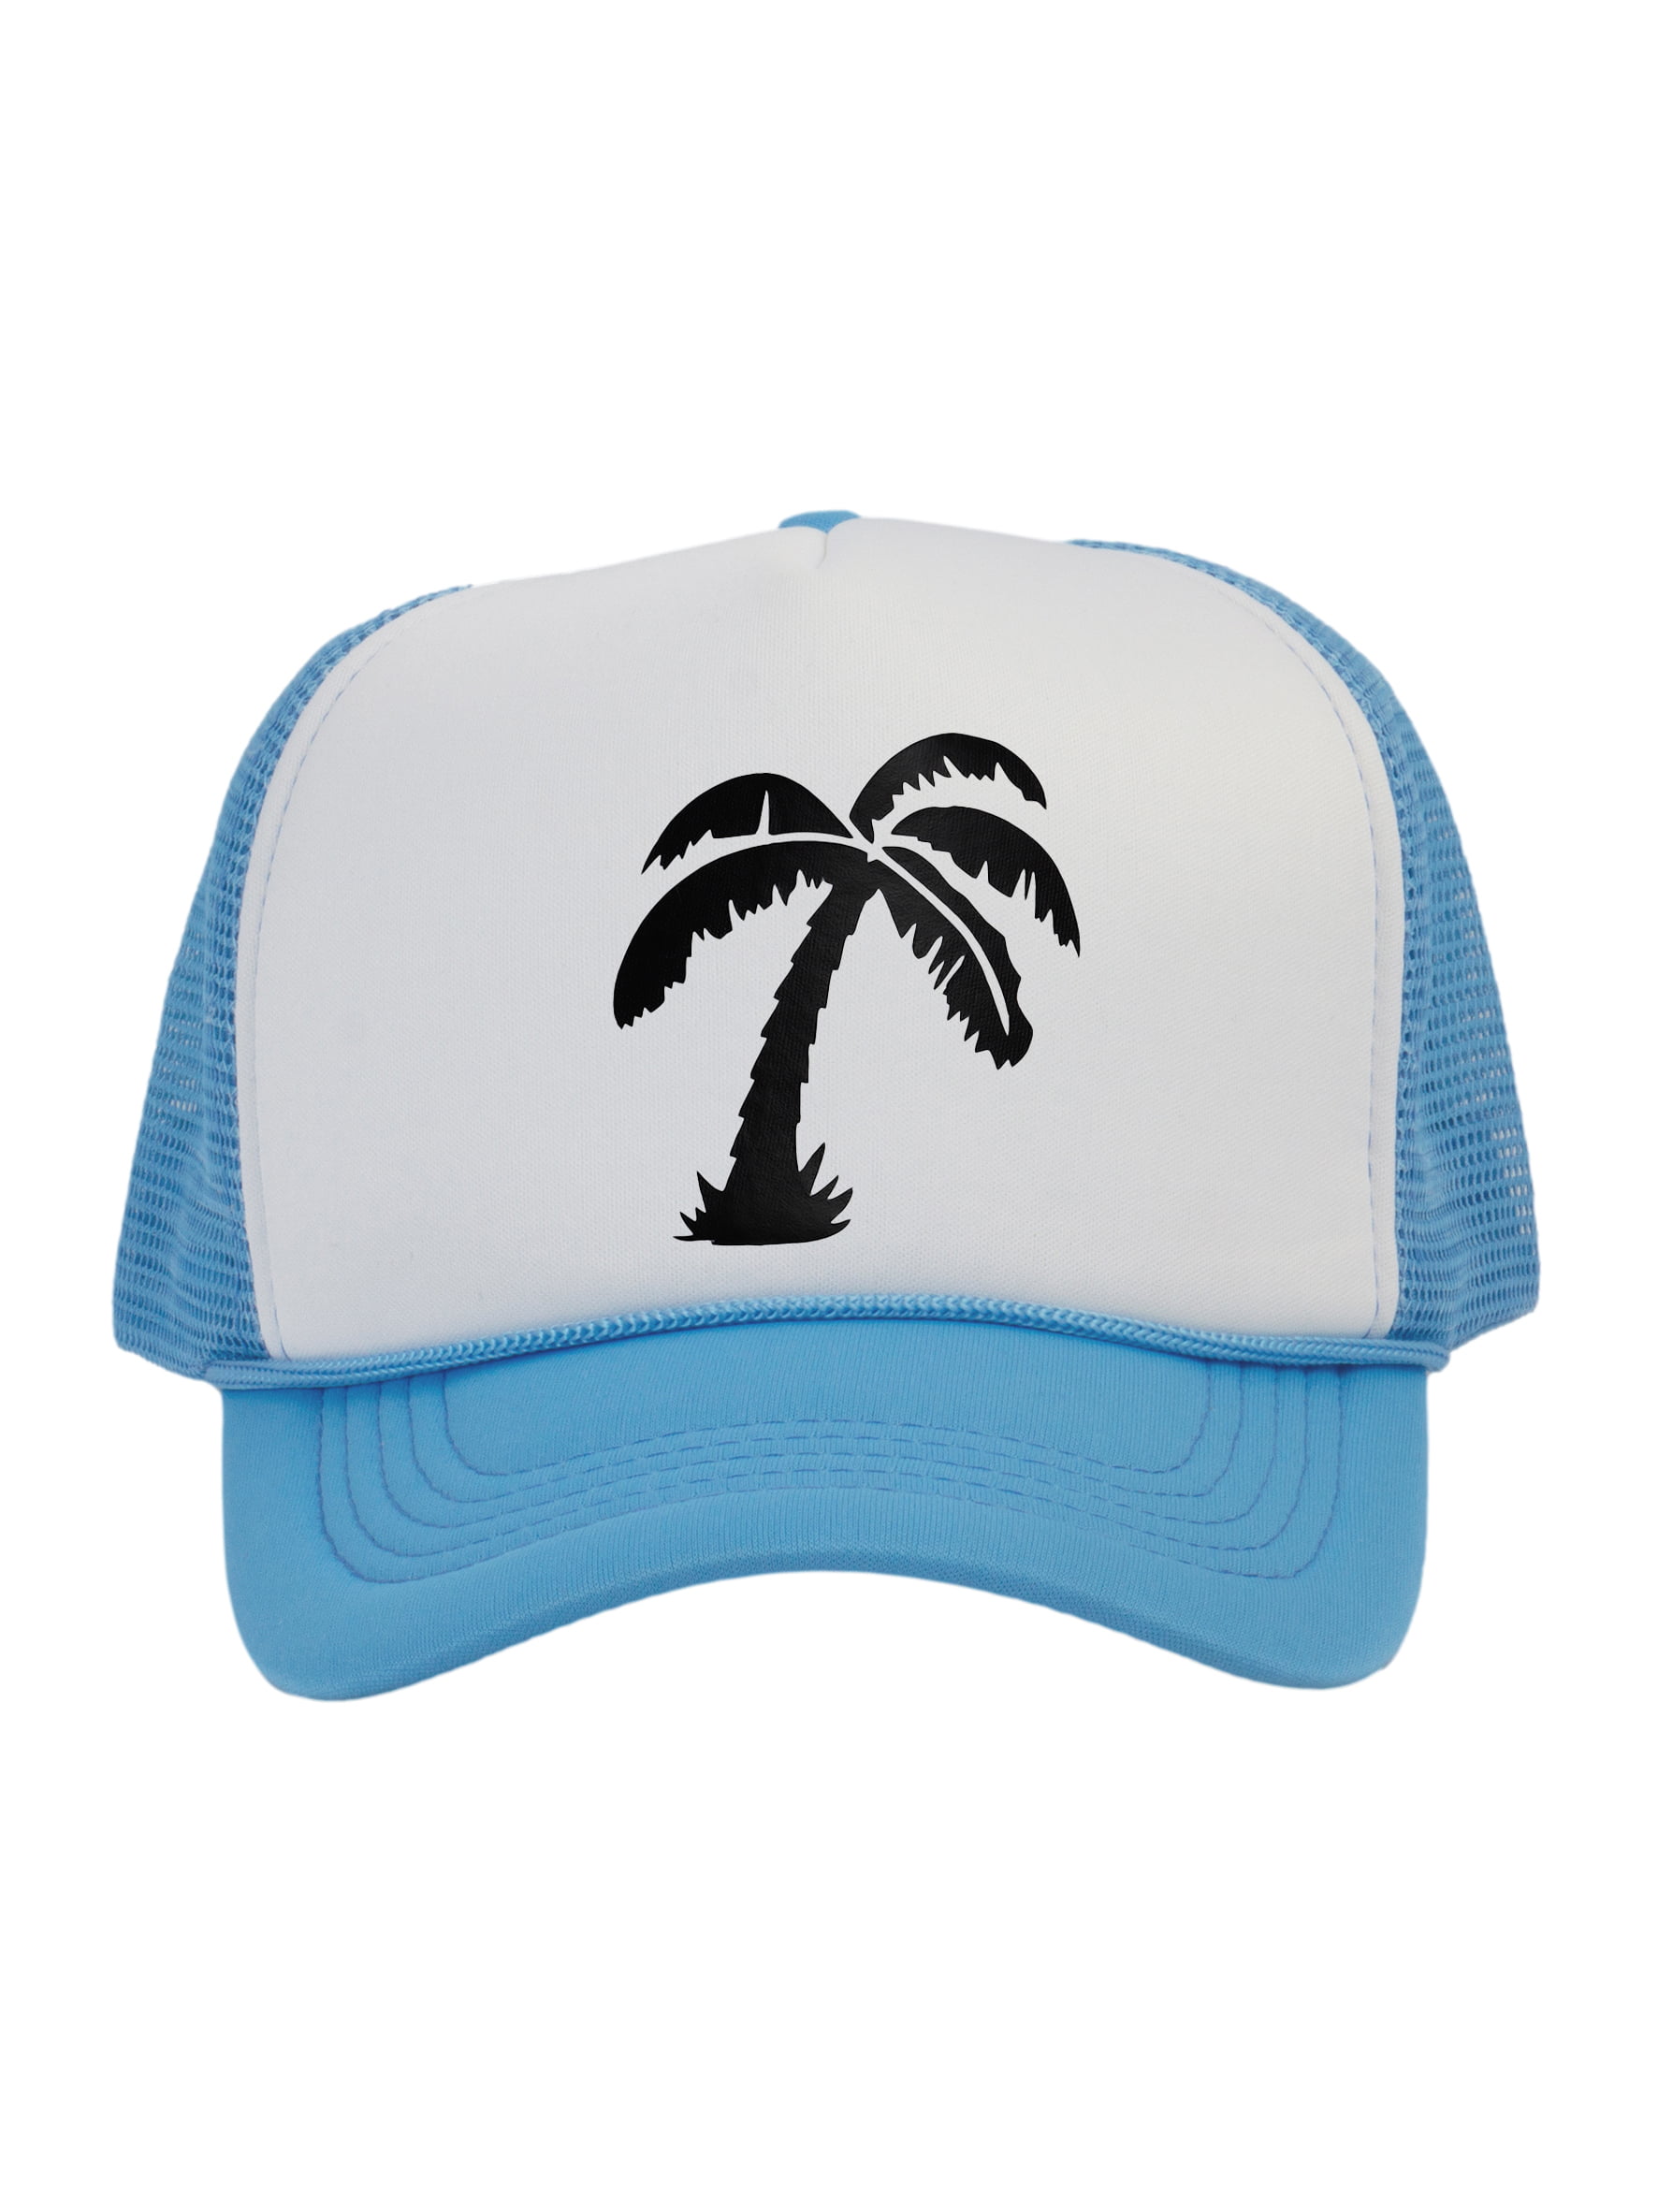 Men's Palm Tree Cap Snapback Trucker Hat, White/Light Grey